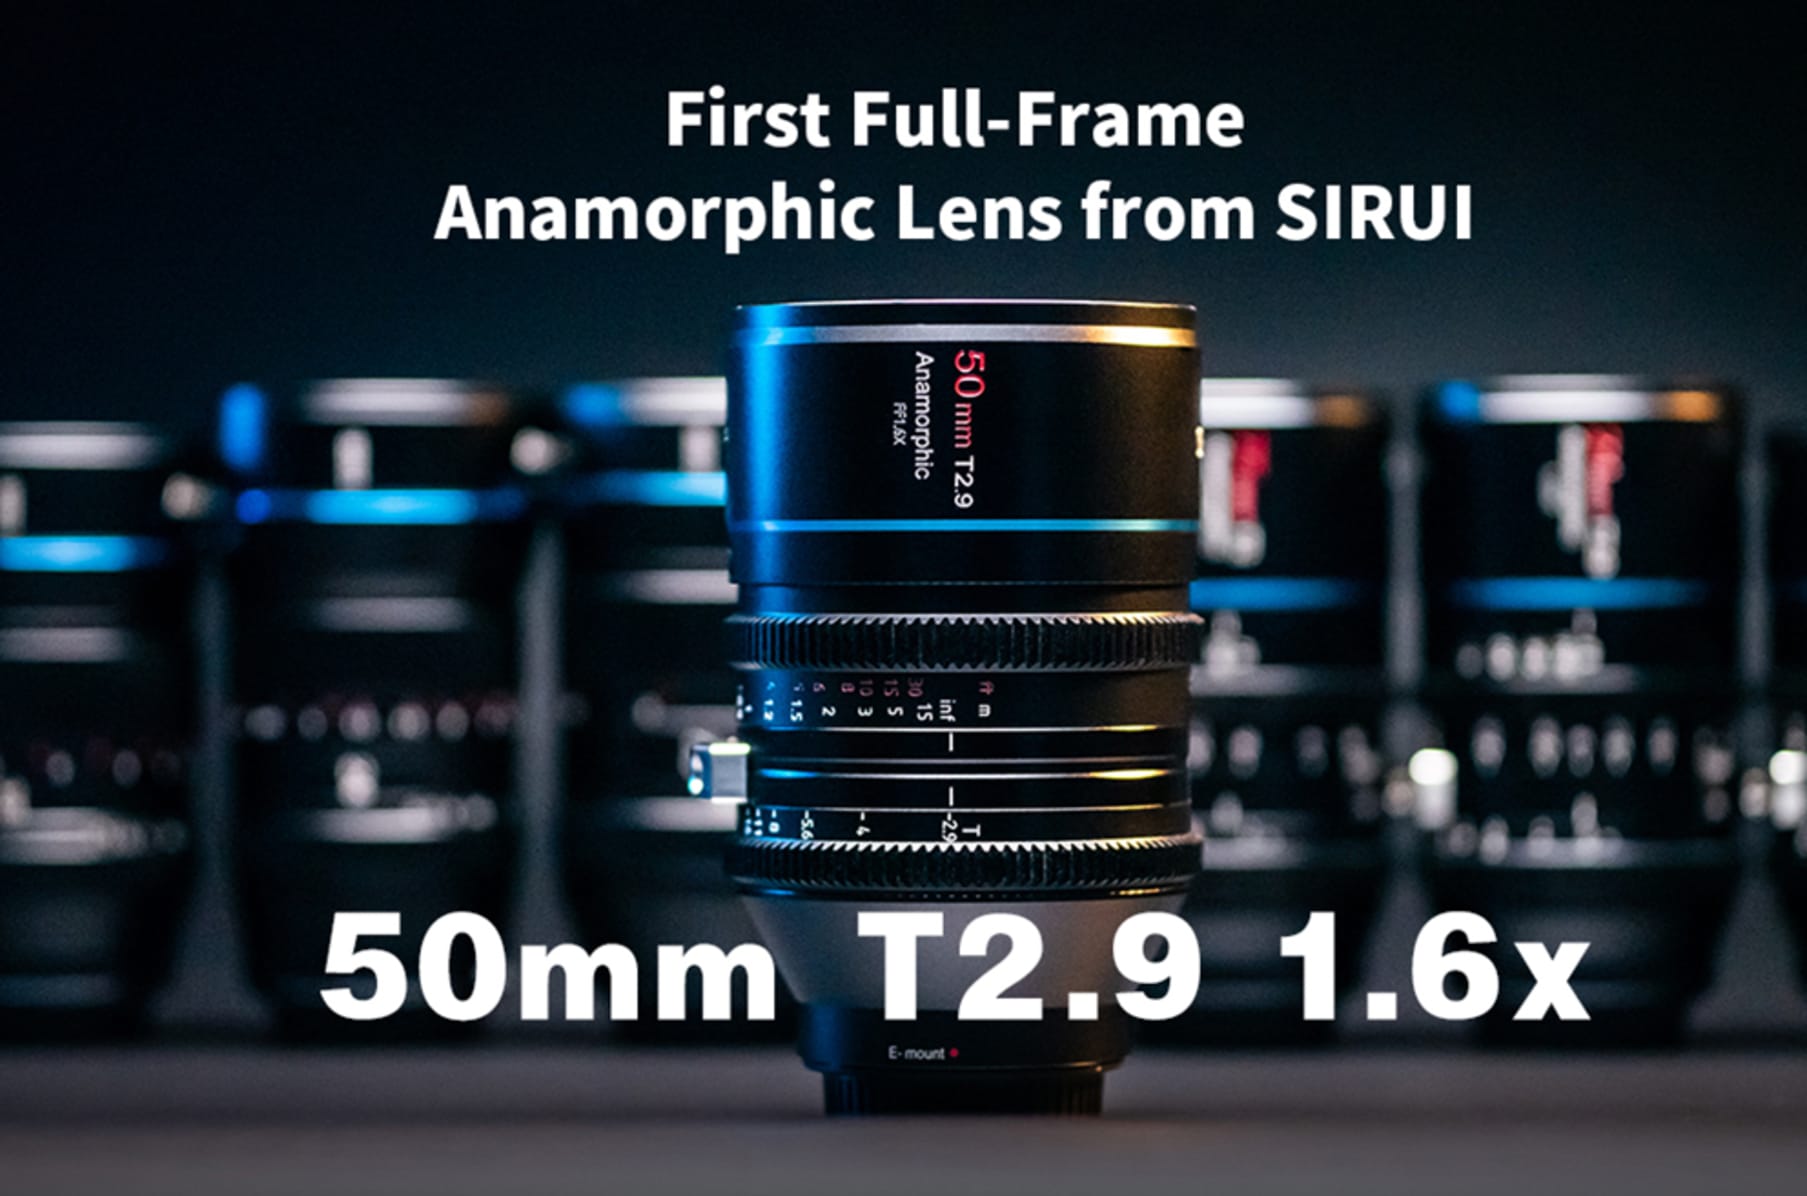 werkelijk Vader fage Stam SIRUI 50mm T2.9 1.6x Full-Frame Anamorphic Lens | Indiegogo